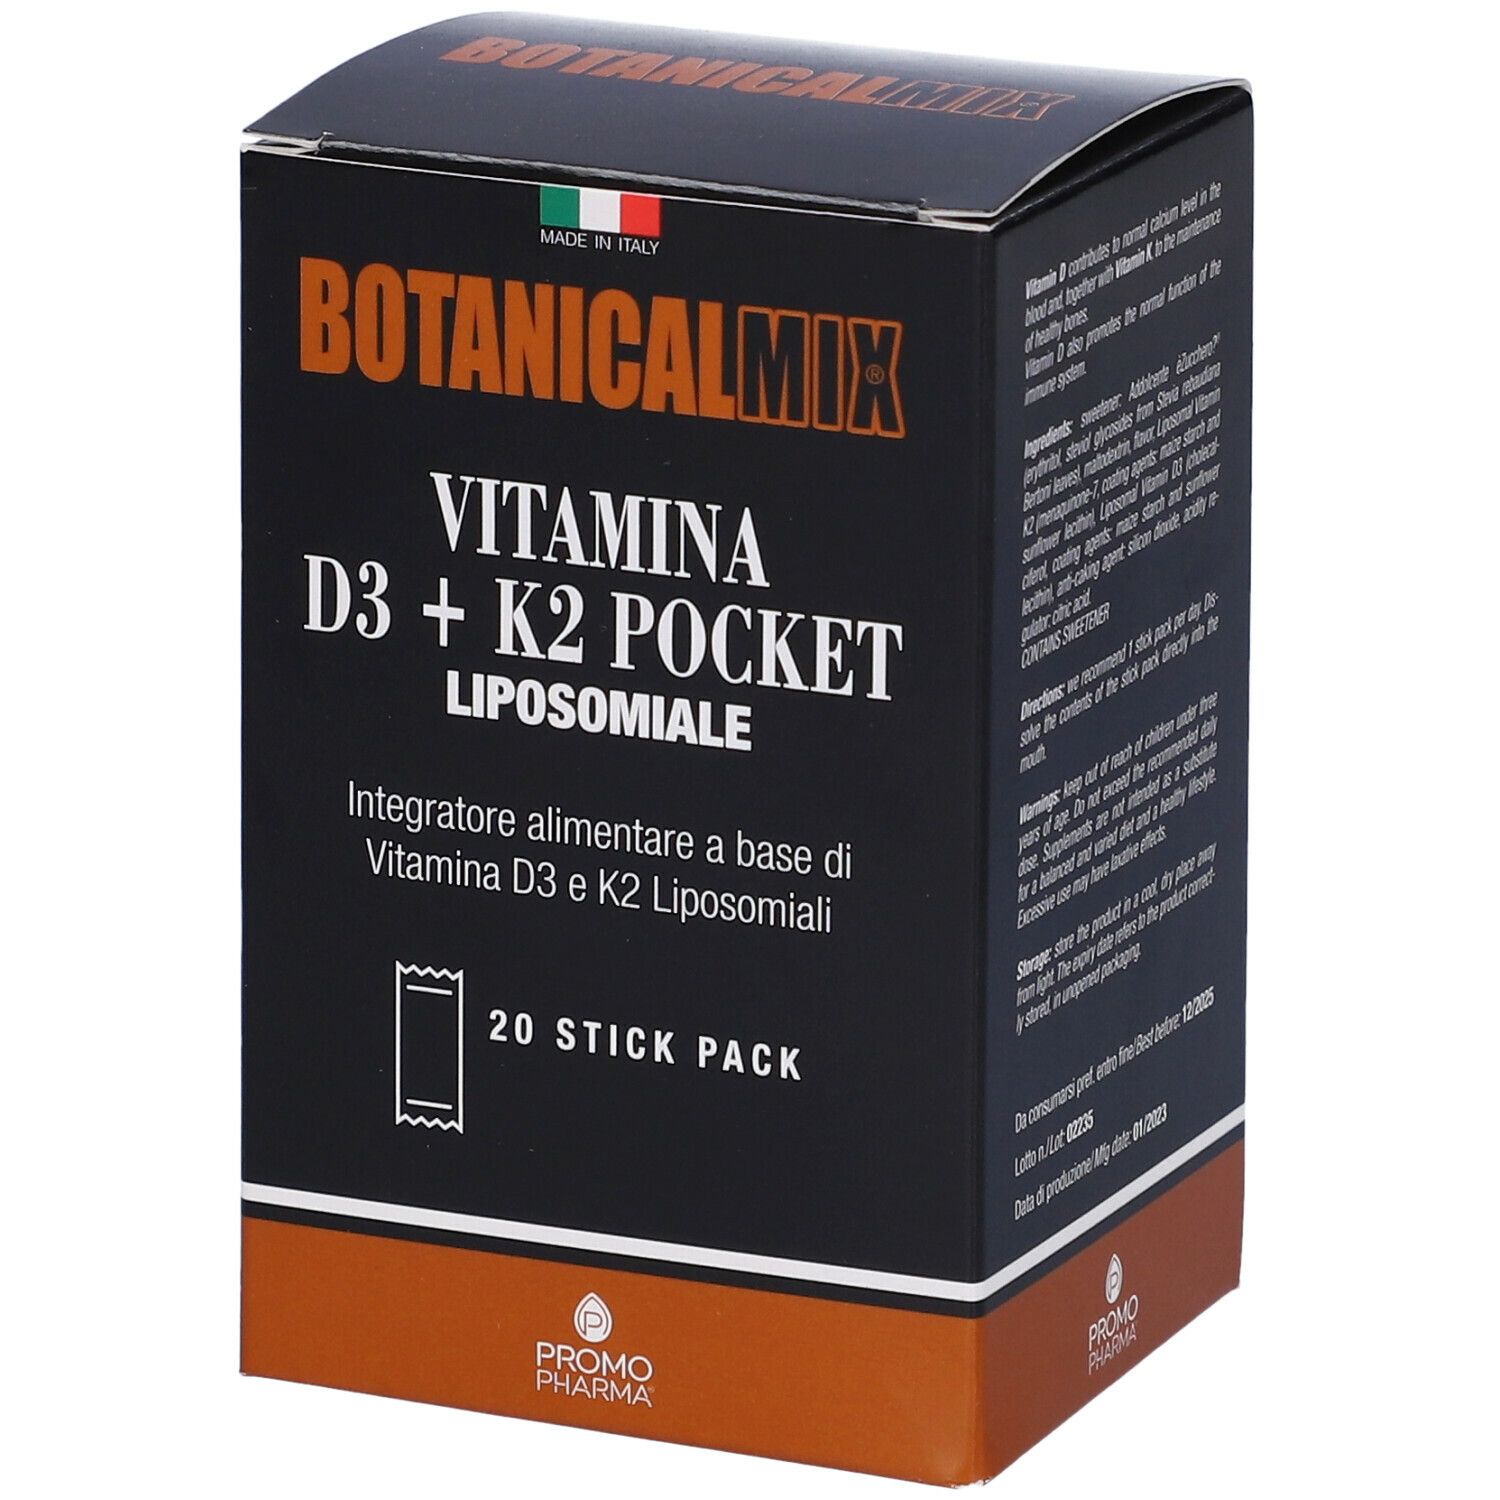 PromoPharma® Botanical Mix® Vitamina D3 + K2 Pocket Liposomiale